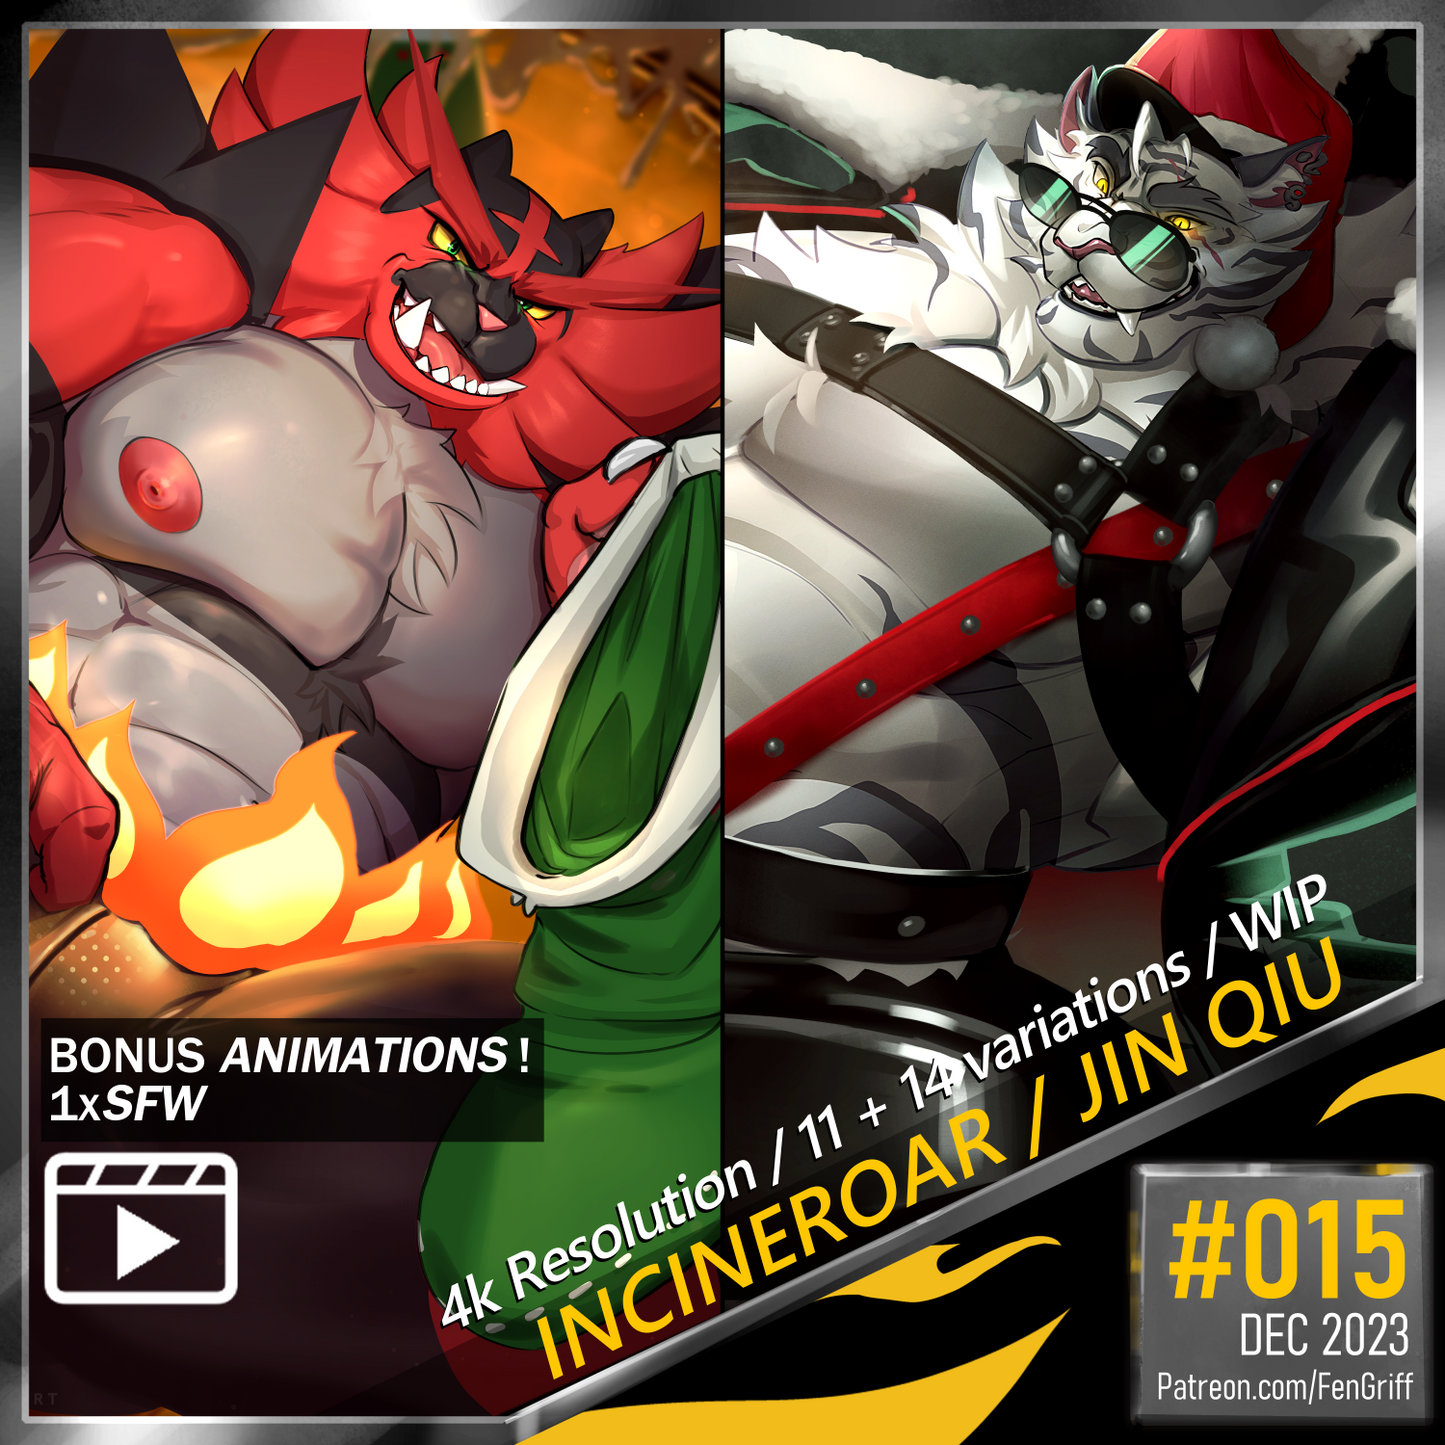 Pack 015: Xmas Incineroar | Jin Qiu [Animated]